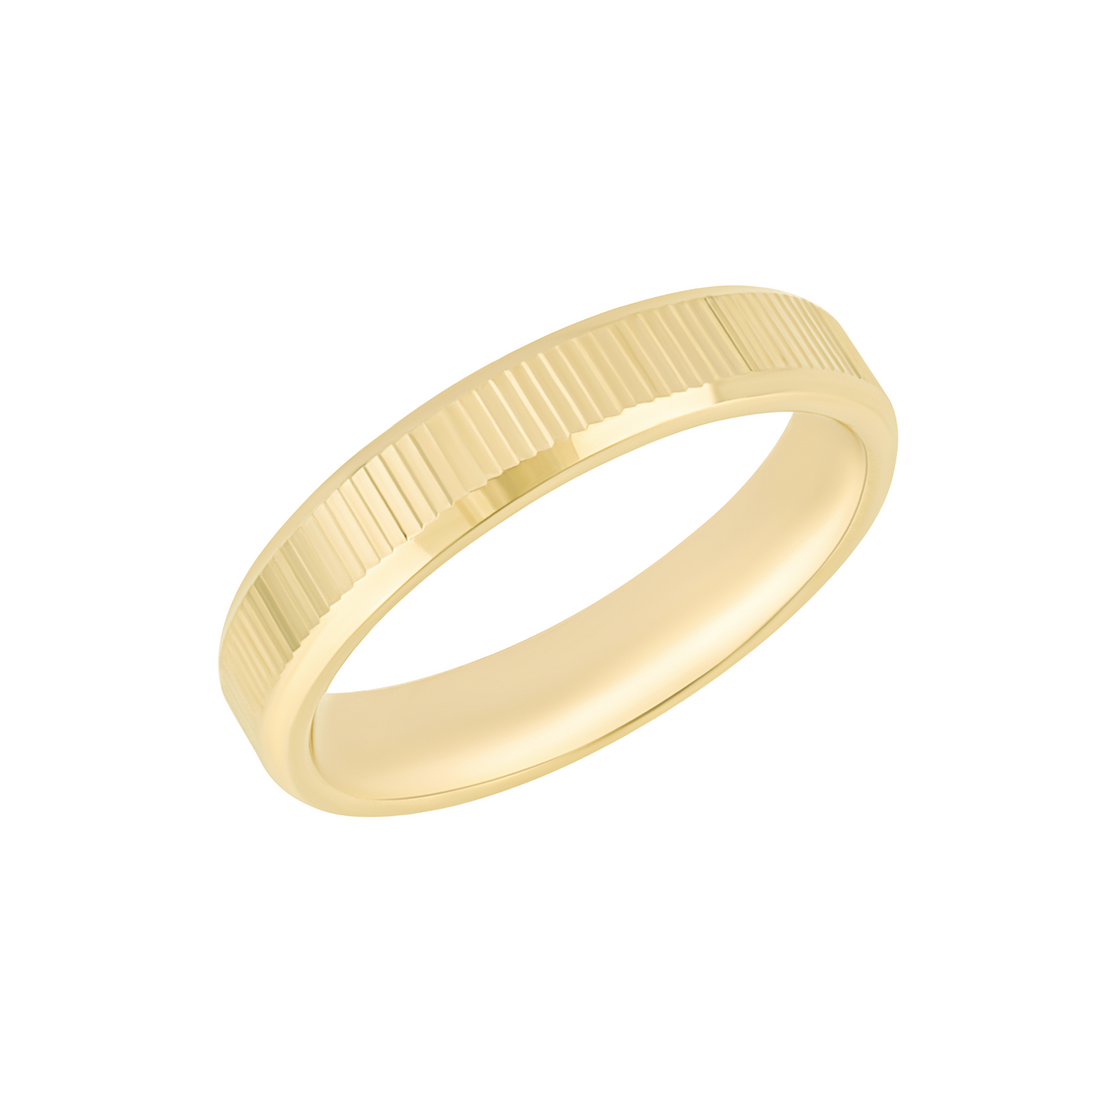 Ridged Textured Ring in 9ct Yellow Gold - Robert Anthony Jewellers, Edinburgh